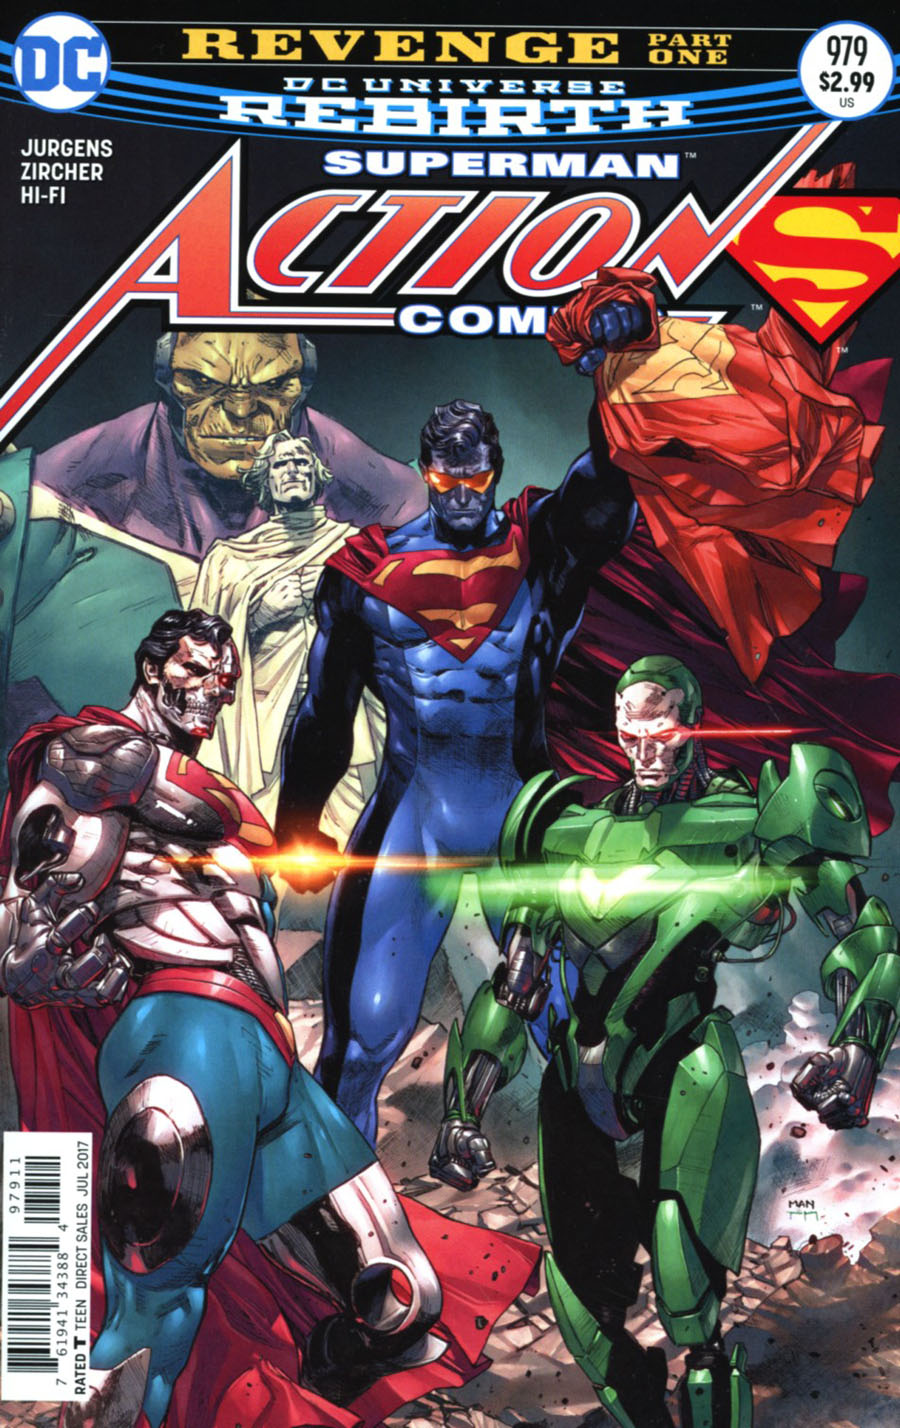 Action Comics Vol 2 #979 Cover A Regular Clay Mann Cover